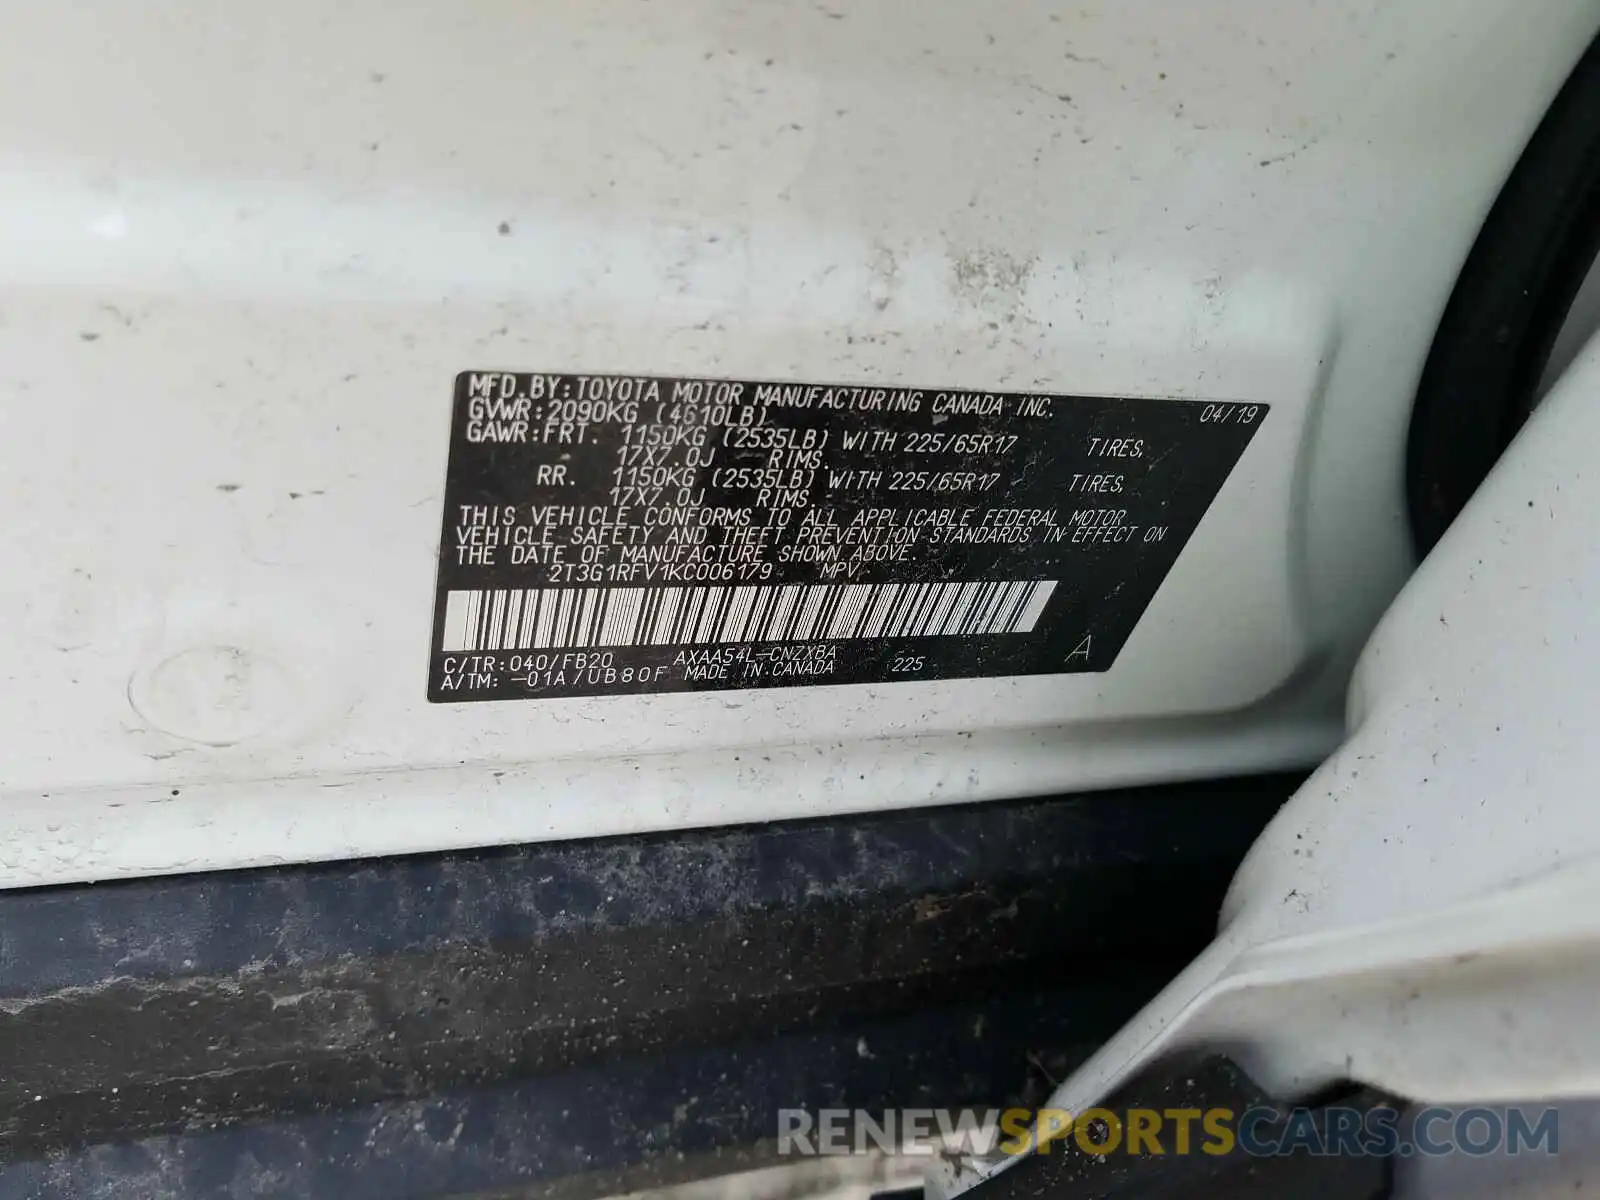 10 Photograph of a damaged car 2T3G1RFV1KC006179 TOYOTA RAV4 2019